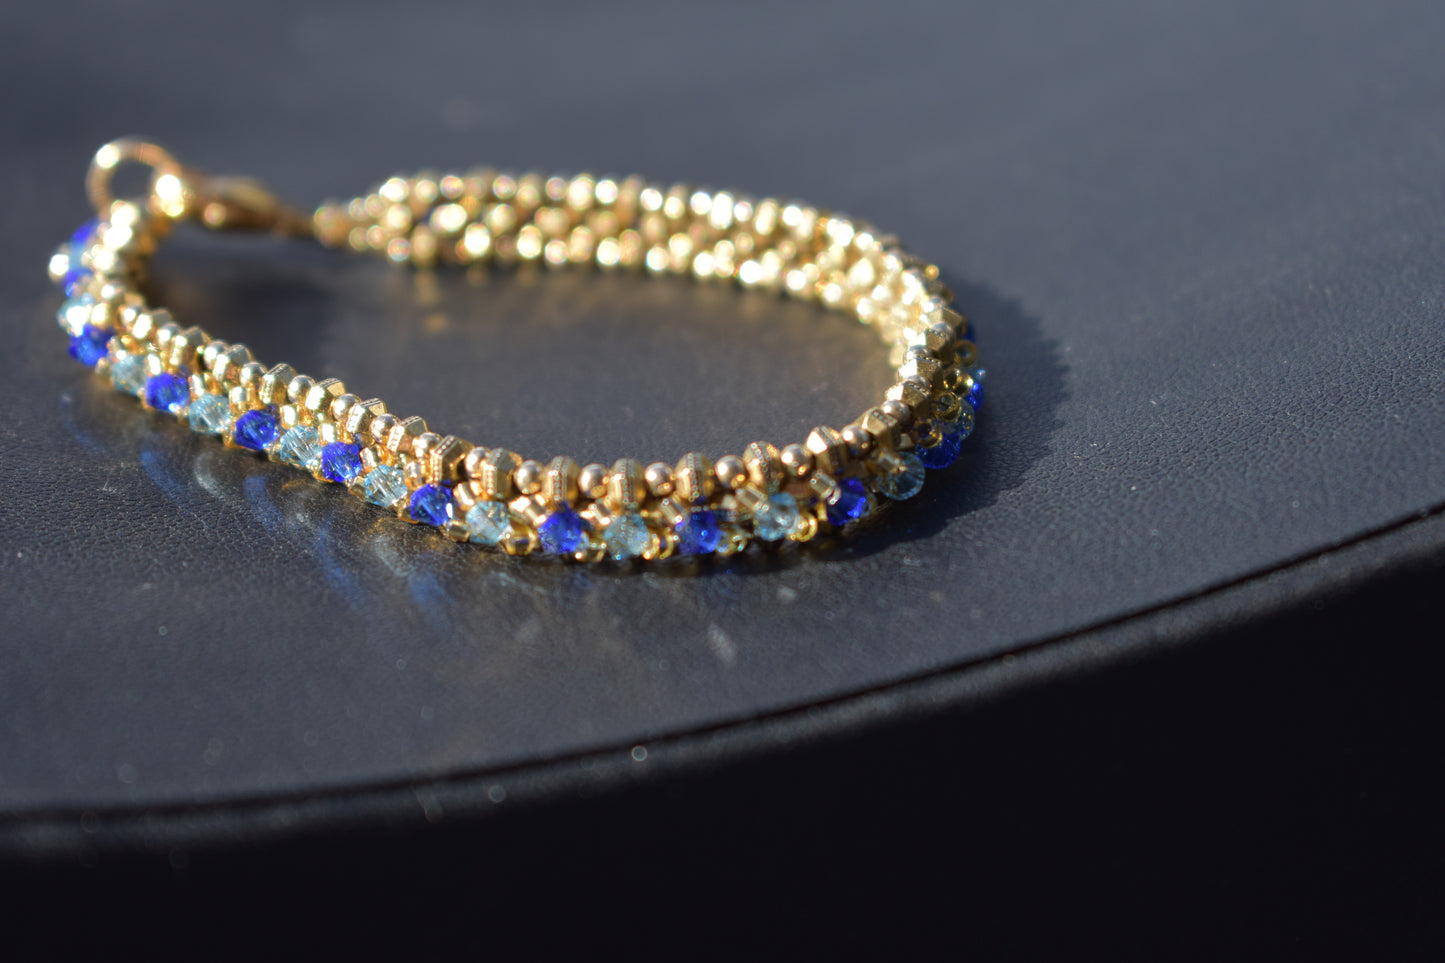 Gold and blue tennis bracelet